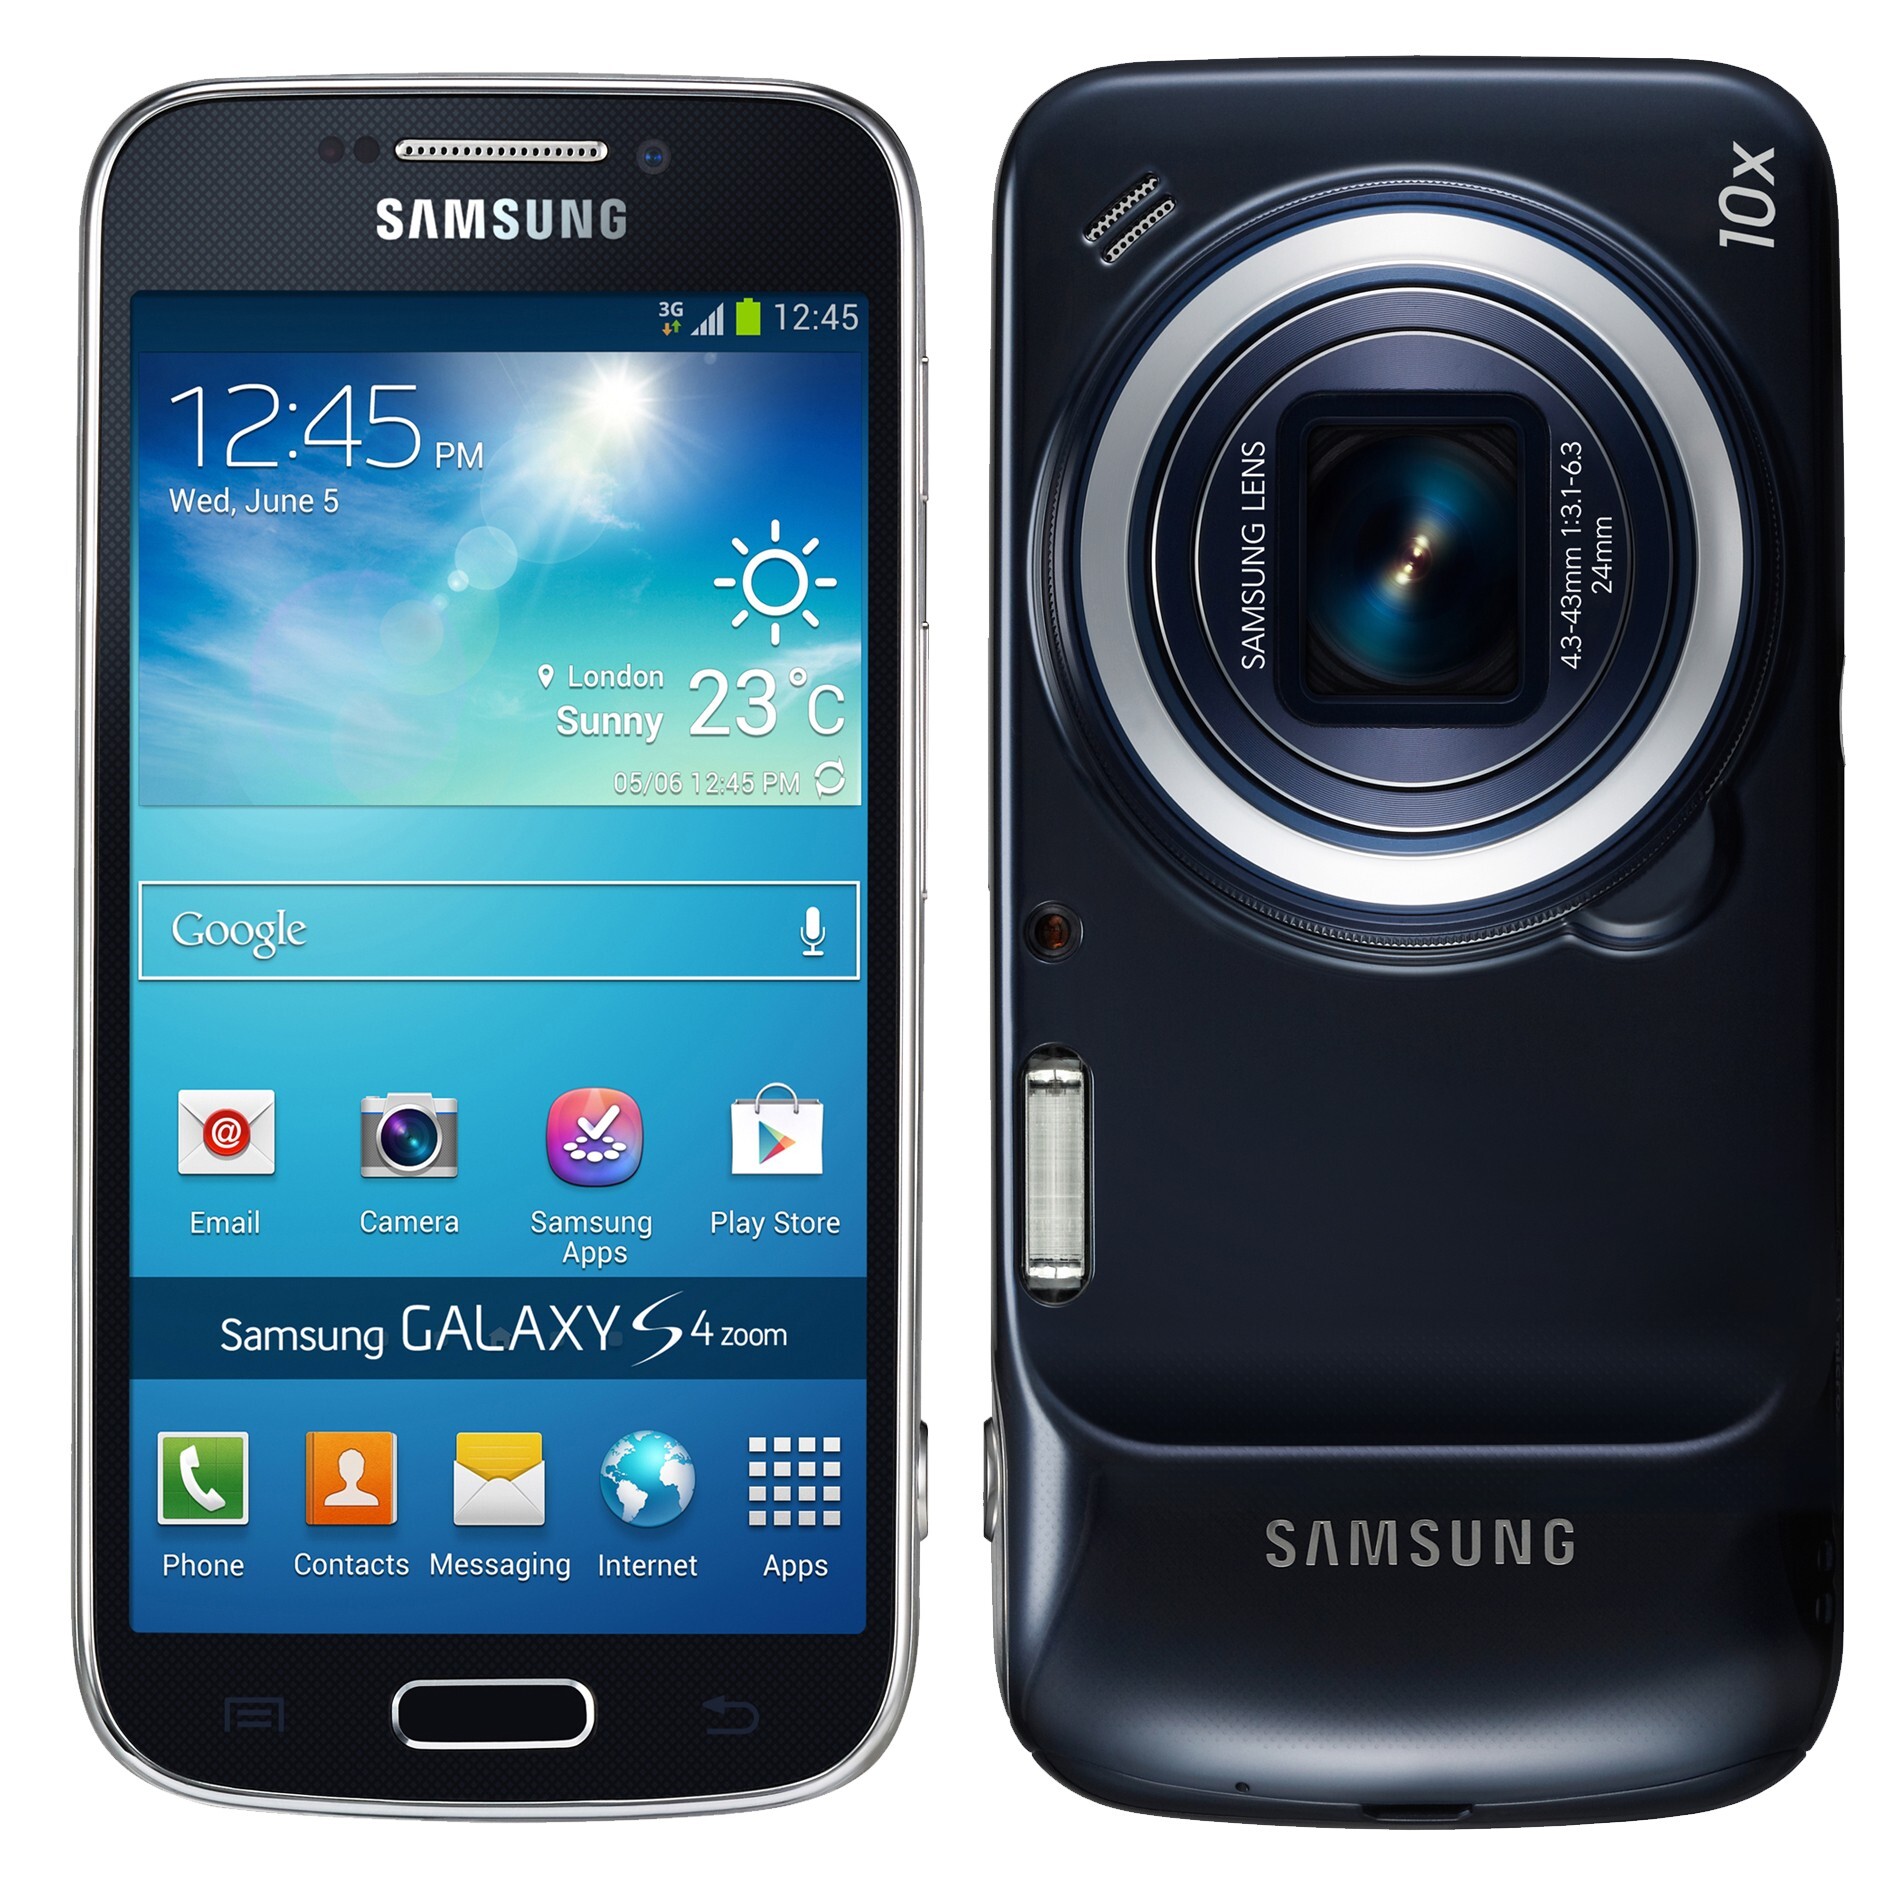 Самсунг купить в спб. Самсунг галакси s4 Zoom. Samsung c101 Galaxy s4 Zoom. Самсунг галакси с4 зум. Самсунг галакси зум s4.